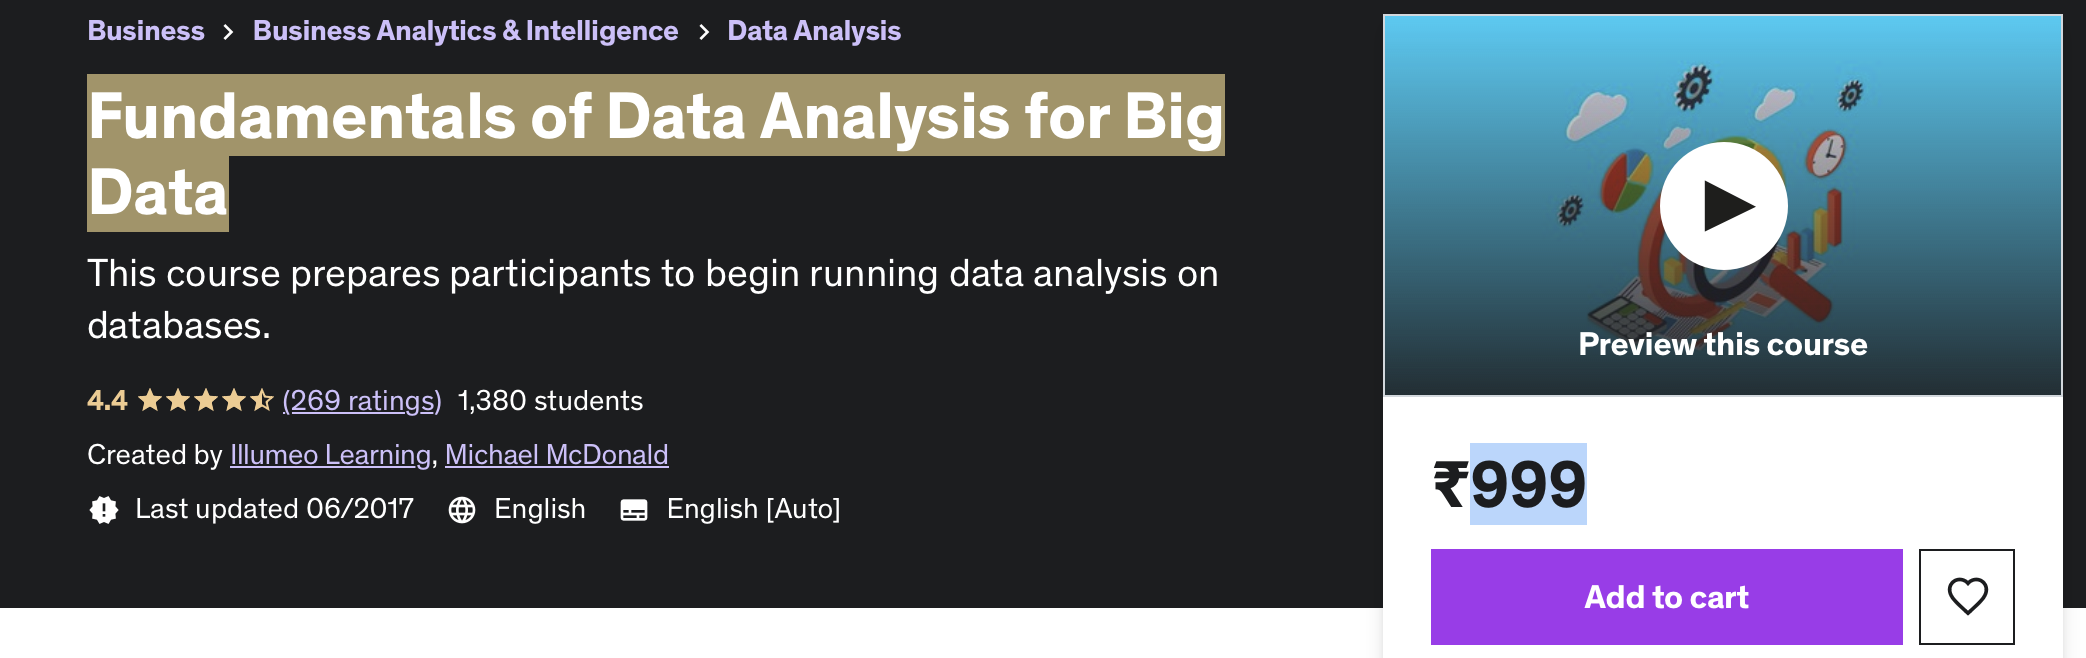 Fundamentals of Data Analysis for Big Data